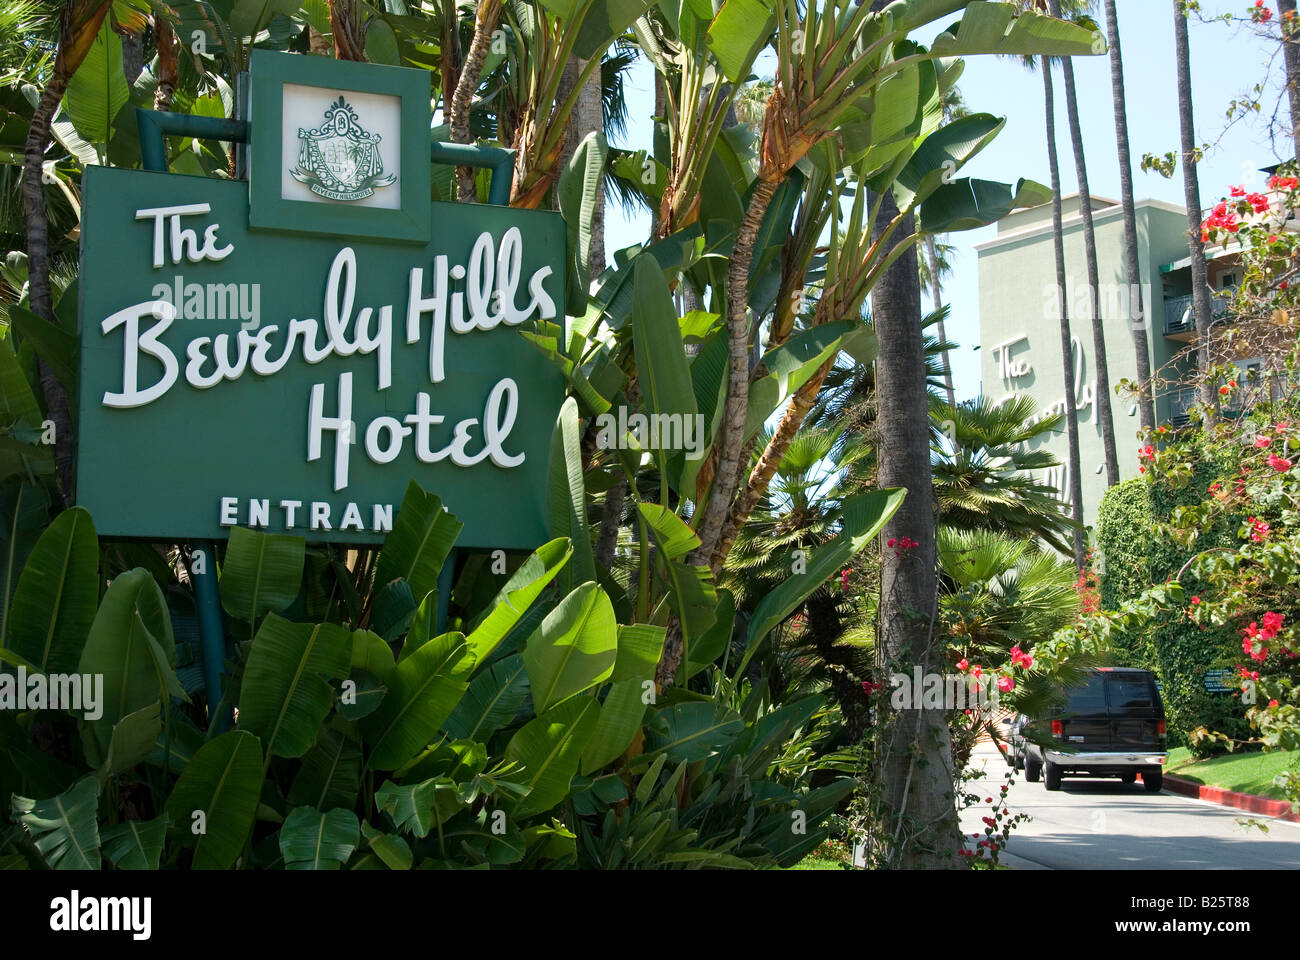 Beverly Hills Hotel Southern California berühmten Hotel Landmark Los Angeles Palme blaue Himmel Himmel, Eingangsschild, Einfahrt Stockfoto